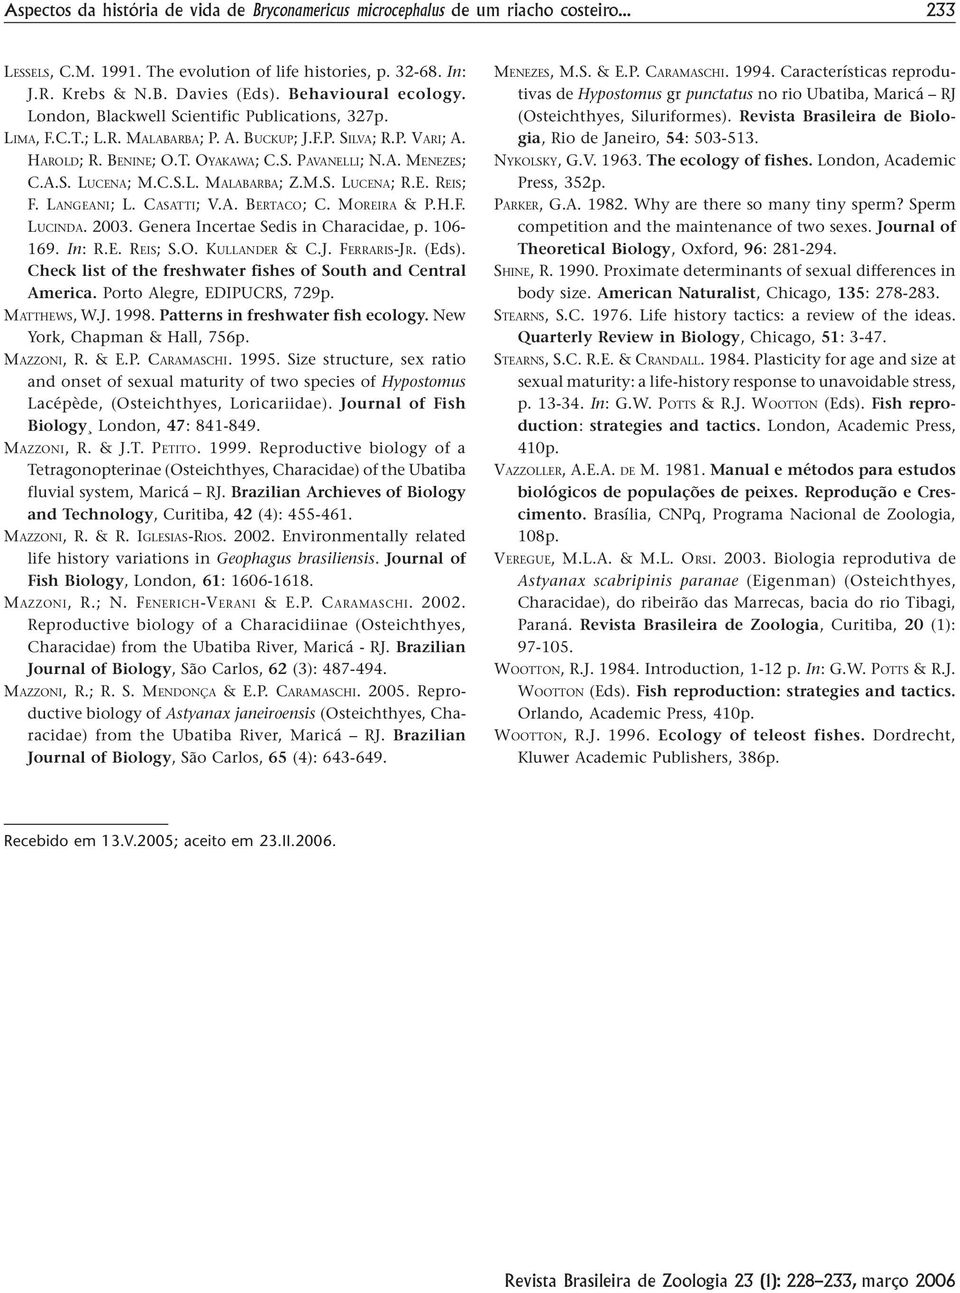 A.S. LUCENA; M.C.S.L. MALABARBA; Z.M.S. LUCENA; R.E. REIS; F. LANGEANI; L. CASATTI; V.A. BERTACO; C. MOREIRA & P.H.F. LUCINDA. 23. Genera Incertae Sedis in Characidae, p. 16-169. In: R.E. REIS; S.O. KULLANDER & C.